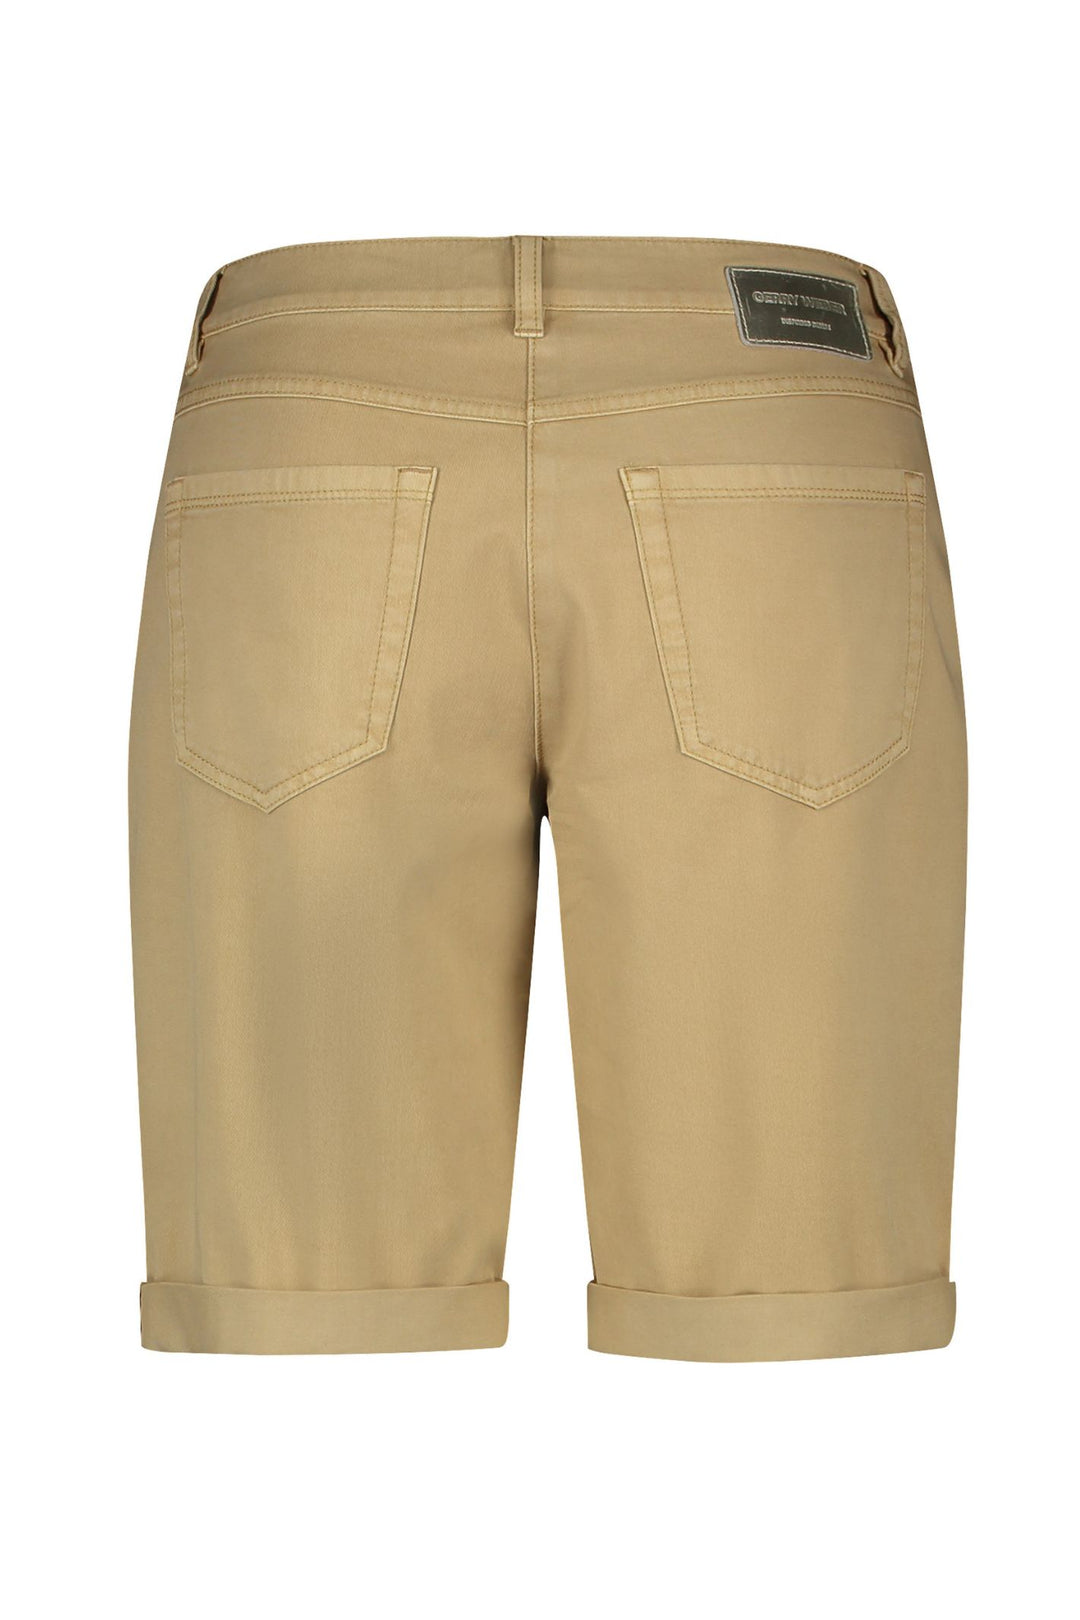 Gerry Weber 222135 Dune Cotton Shorts - Experience Boutique